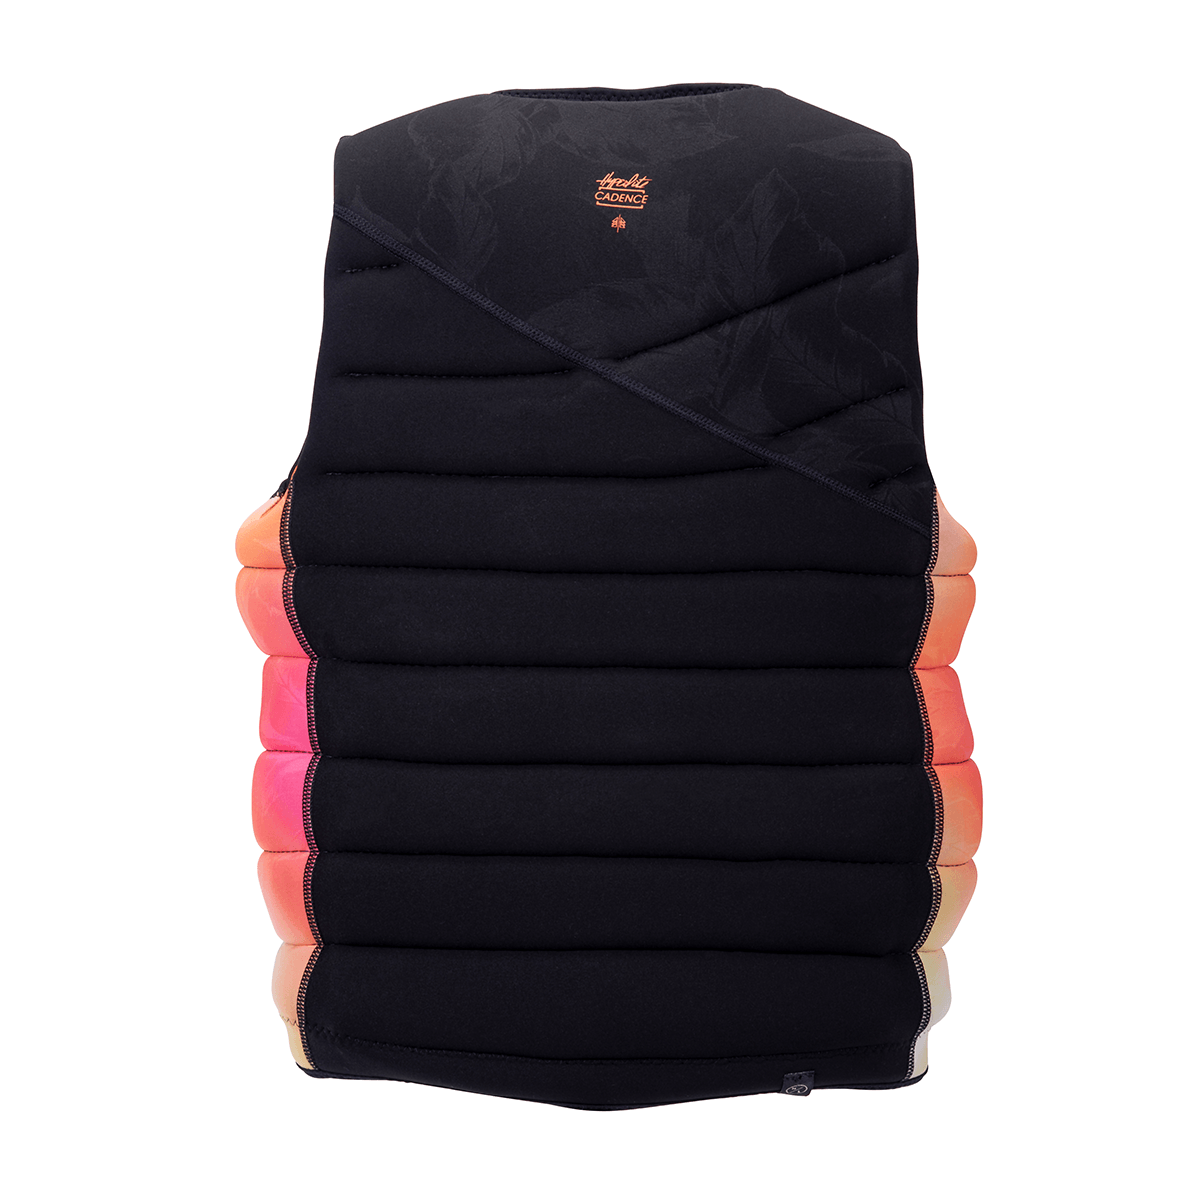 Hyperlite Cadence Comp Wake Vest in Black/Neon - BoardCo